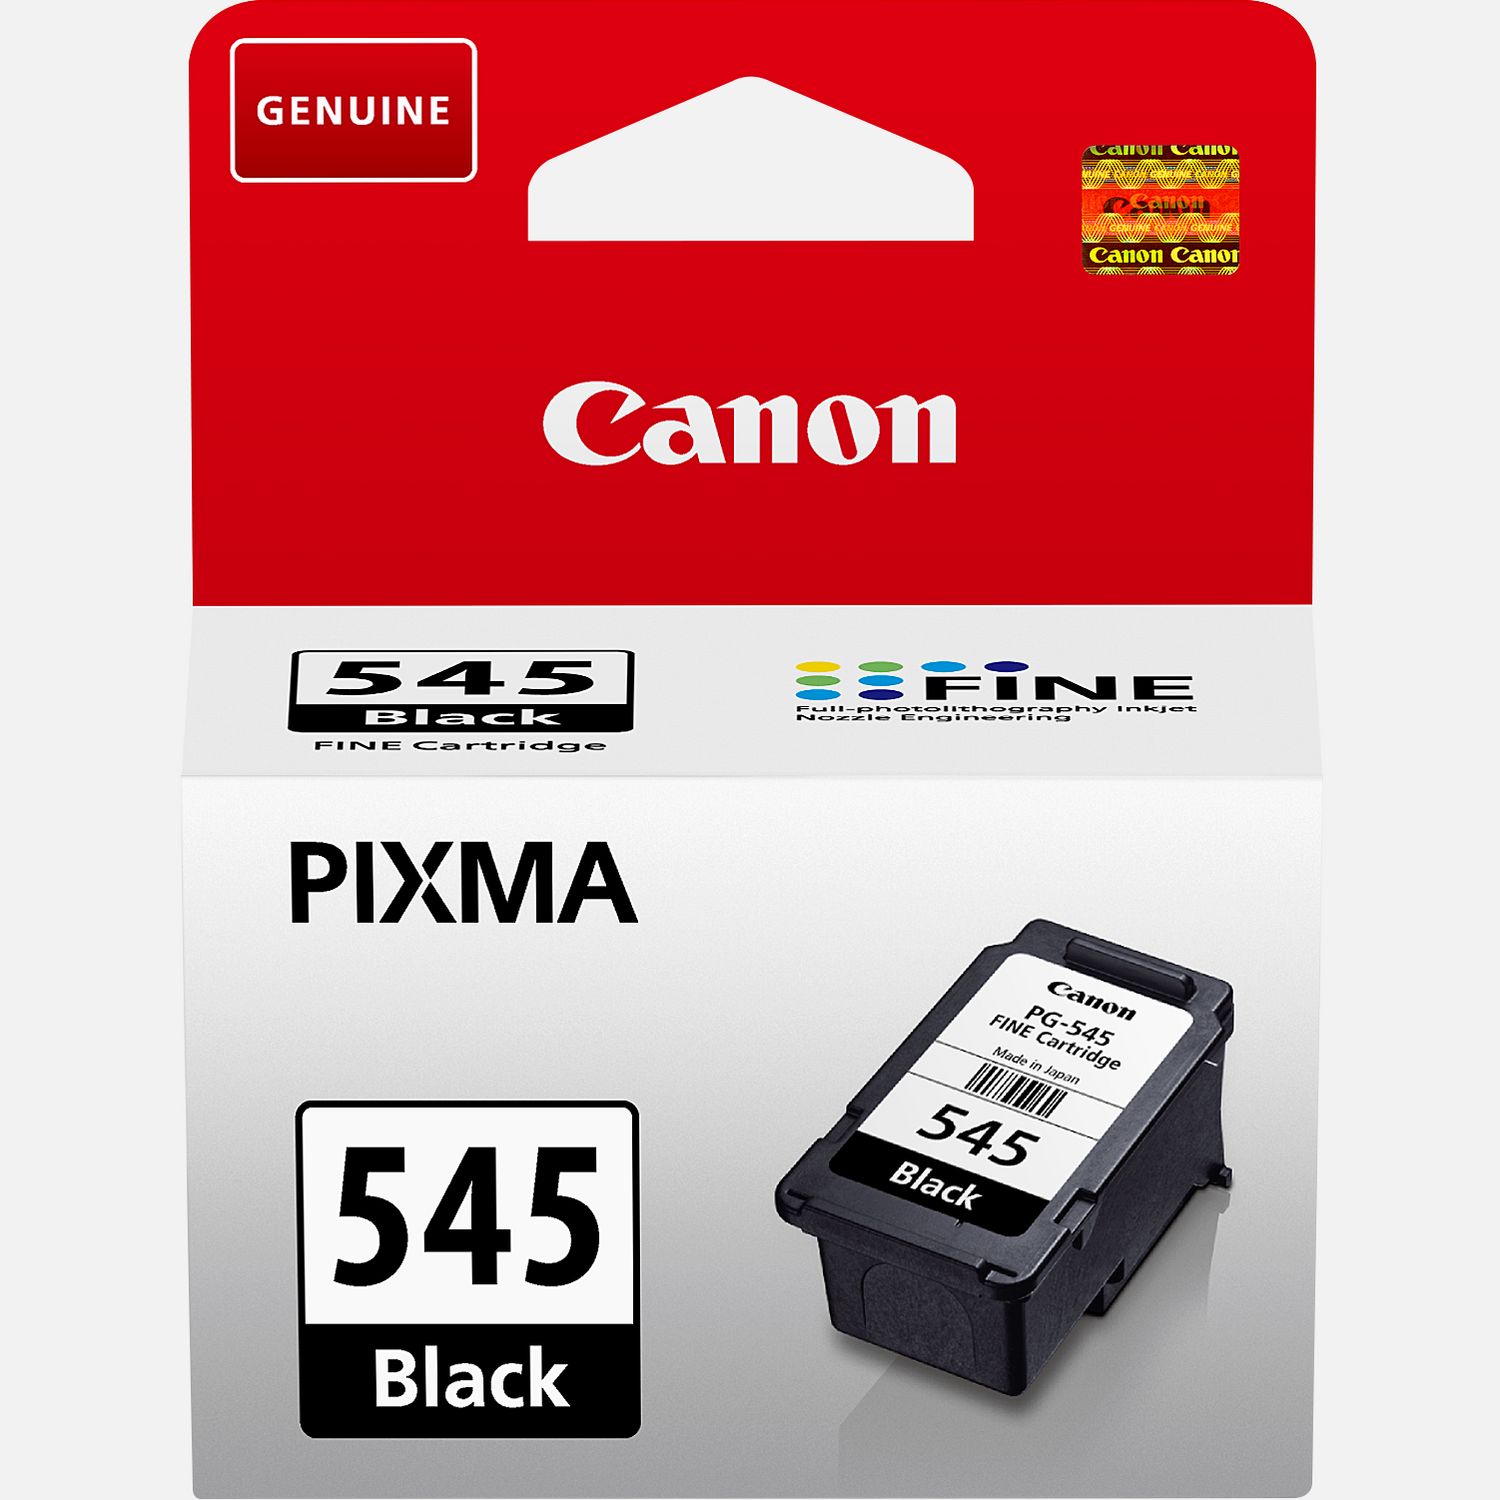 https://i1.adis.ws/i/canon/8287B001_Inkcartridge-PG-545-EUR_2/canon-pg-545-black-ink-cartridge-product-front-view?w=1500&bg=gray95